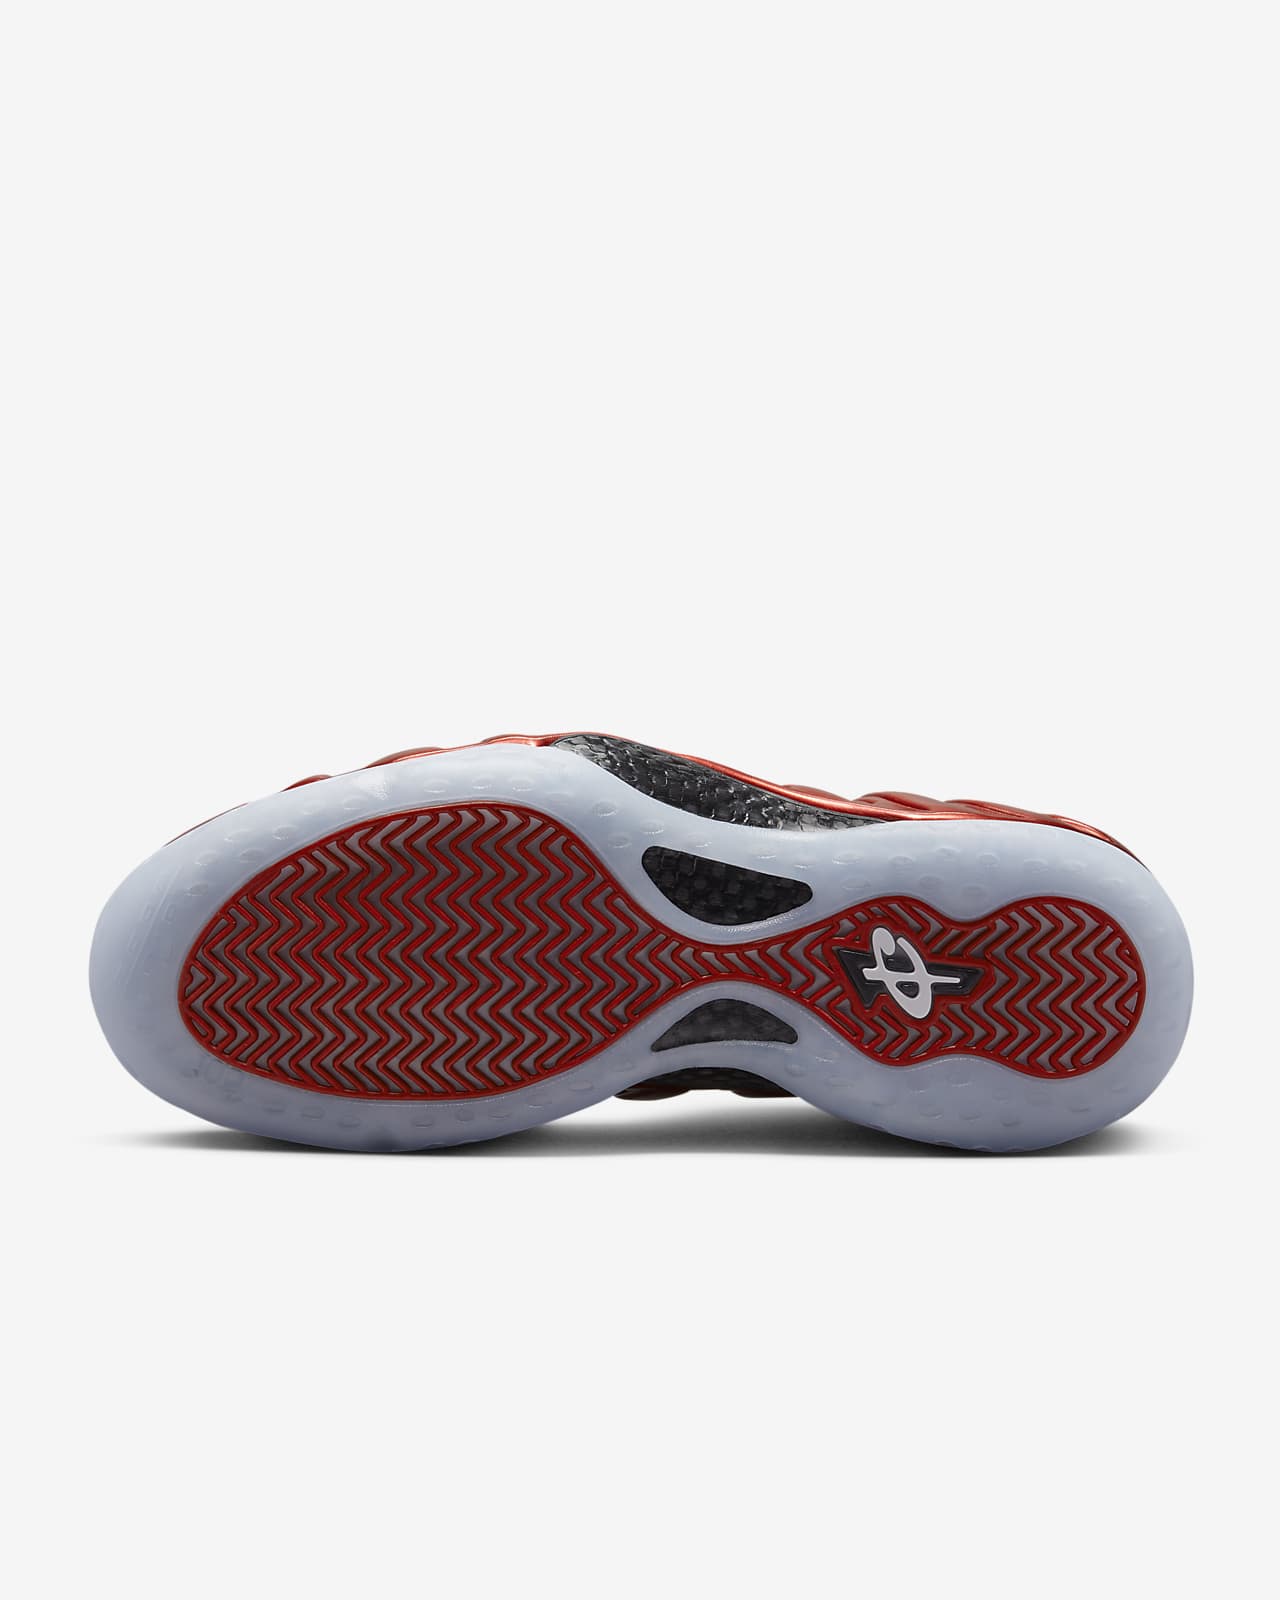 Nike Men's AIR Foamposite ONE Basketball Shoes (Black